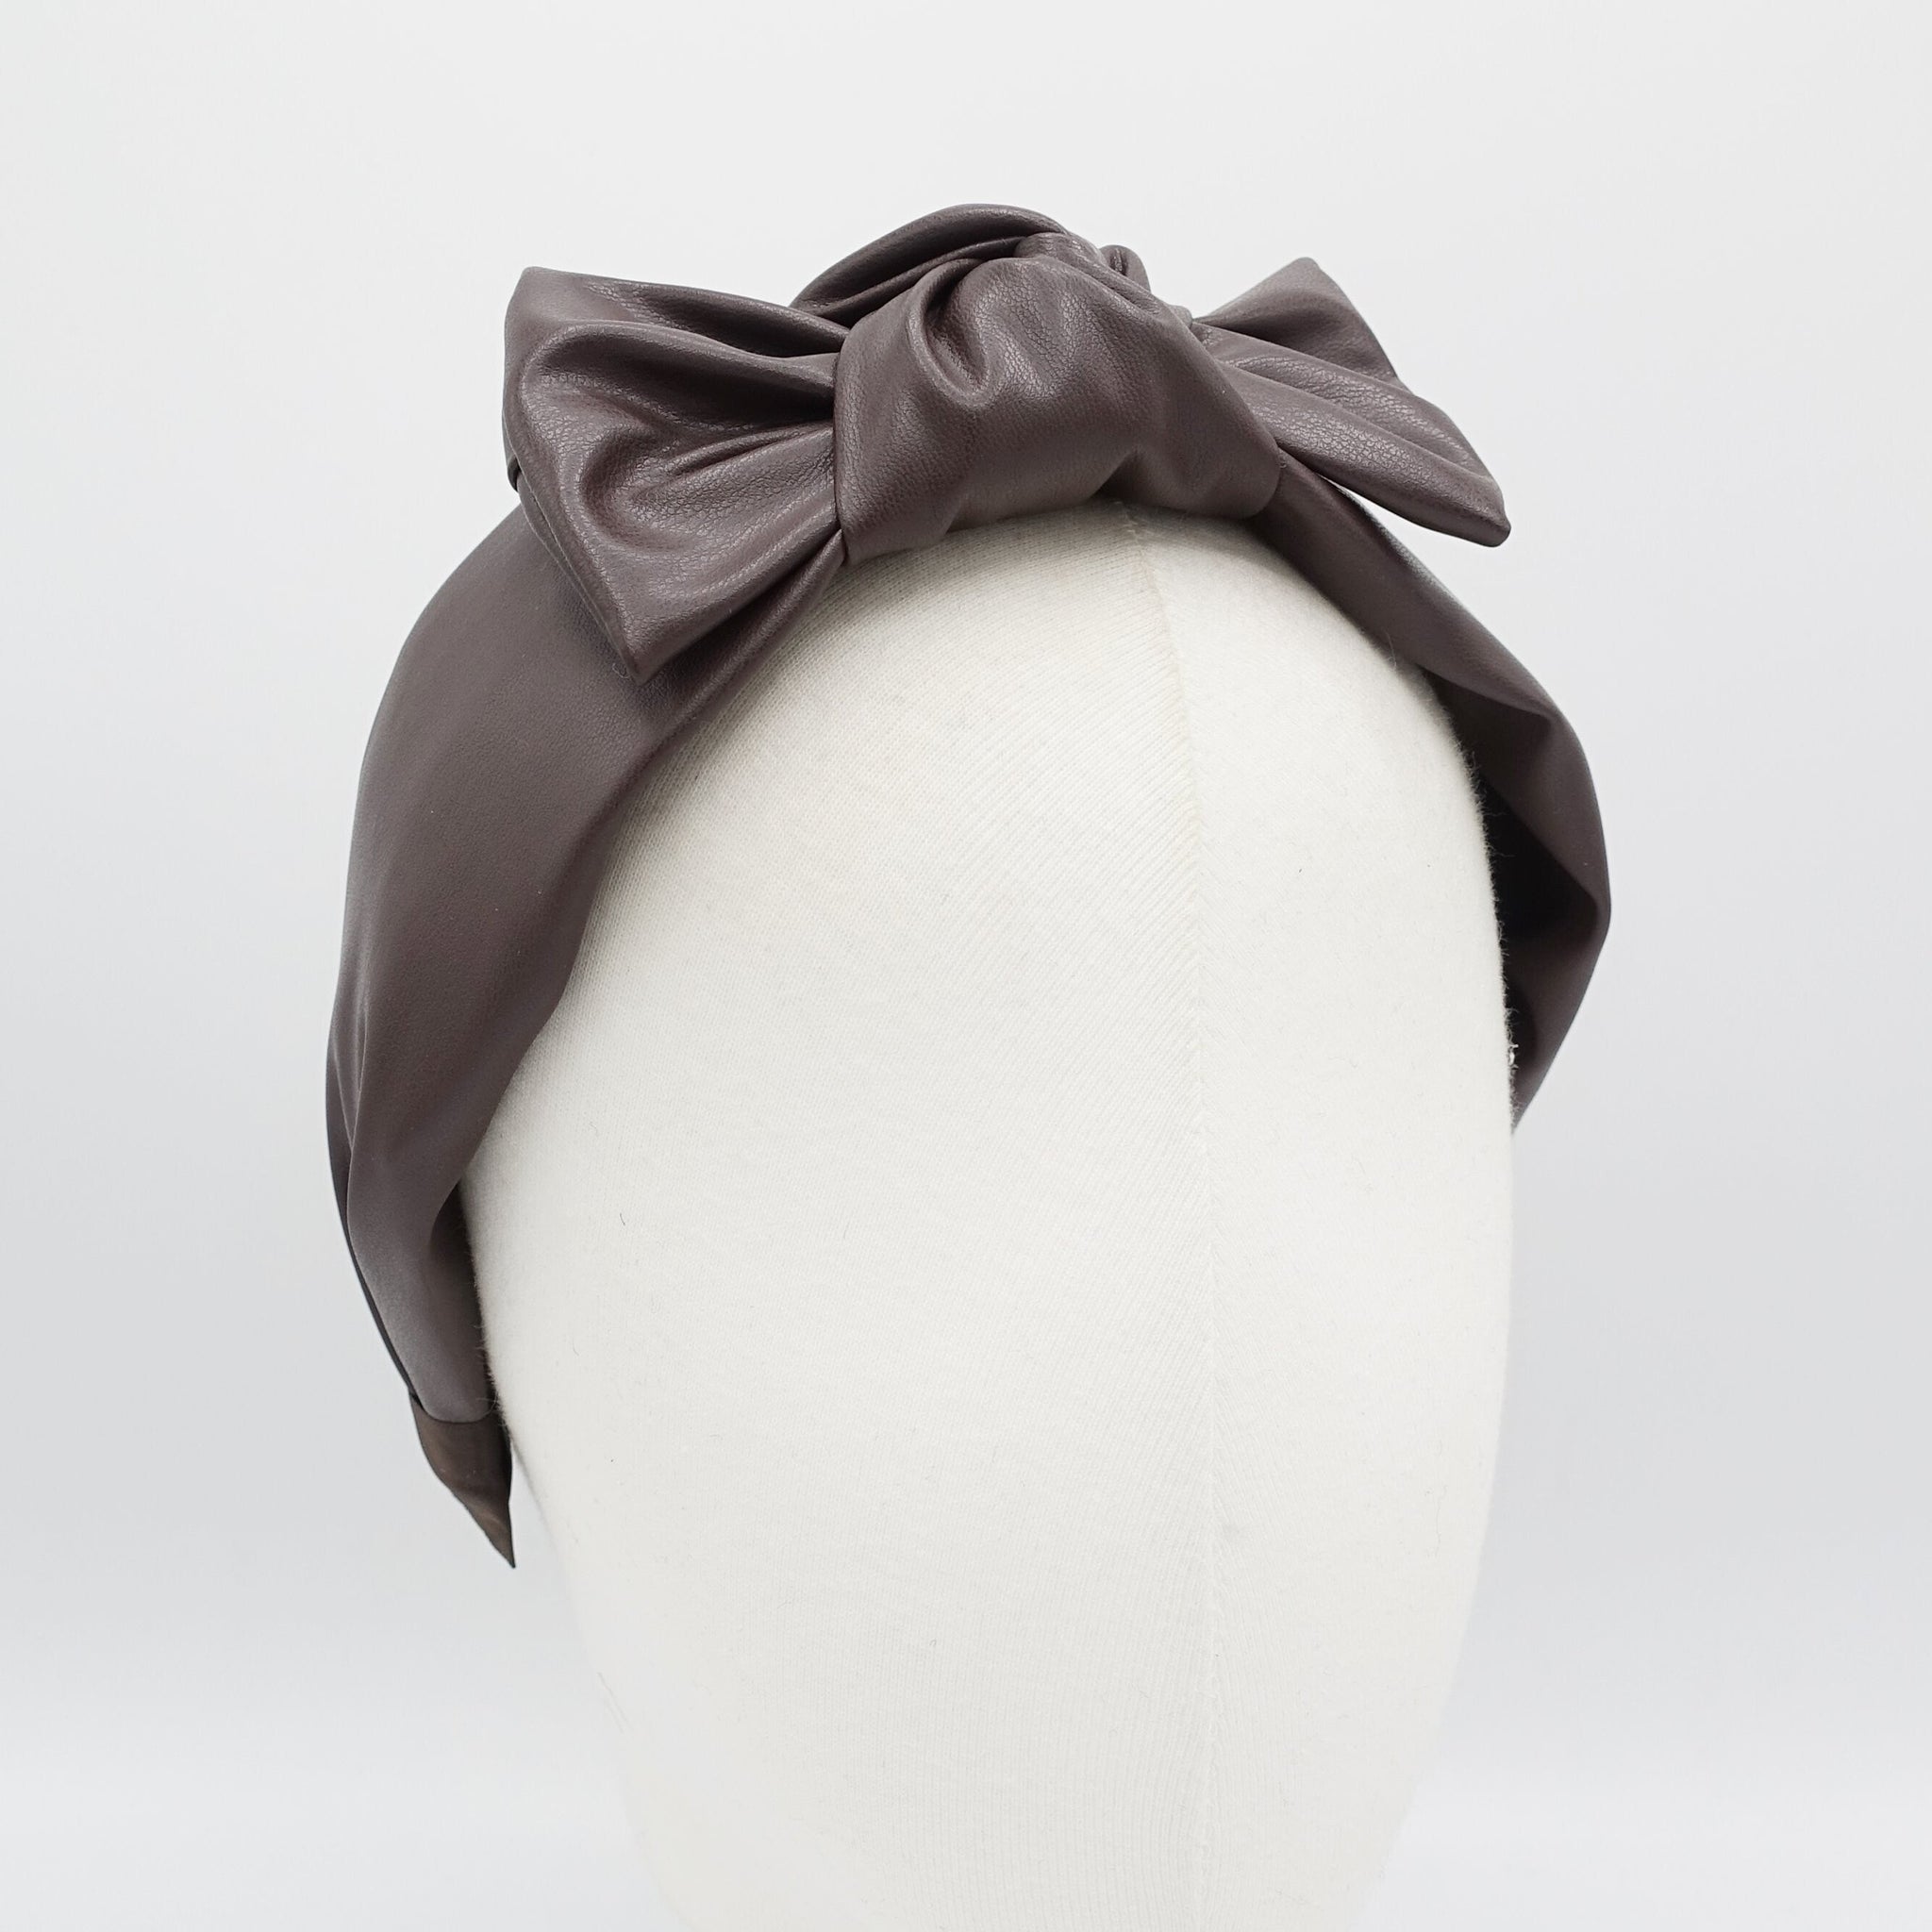 veryshine.com Headband Bow tie leather headband fall winter stylish hairband women hair accessories